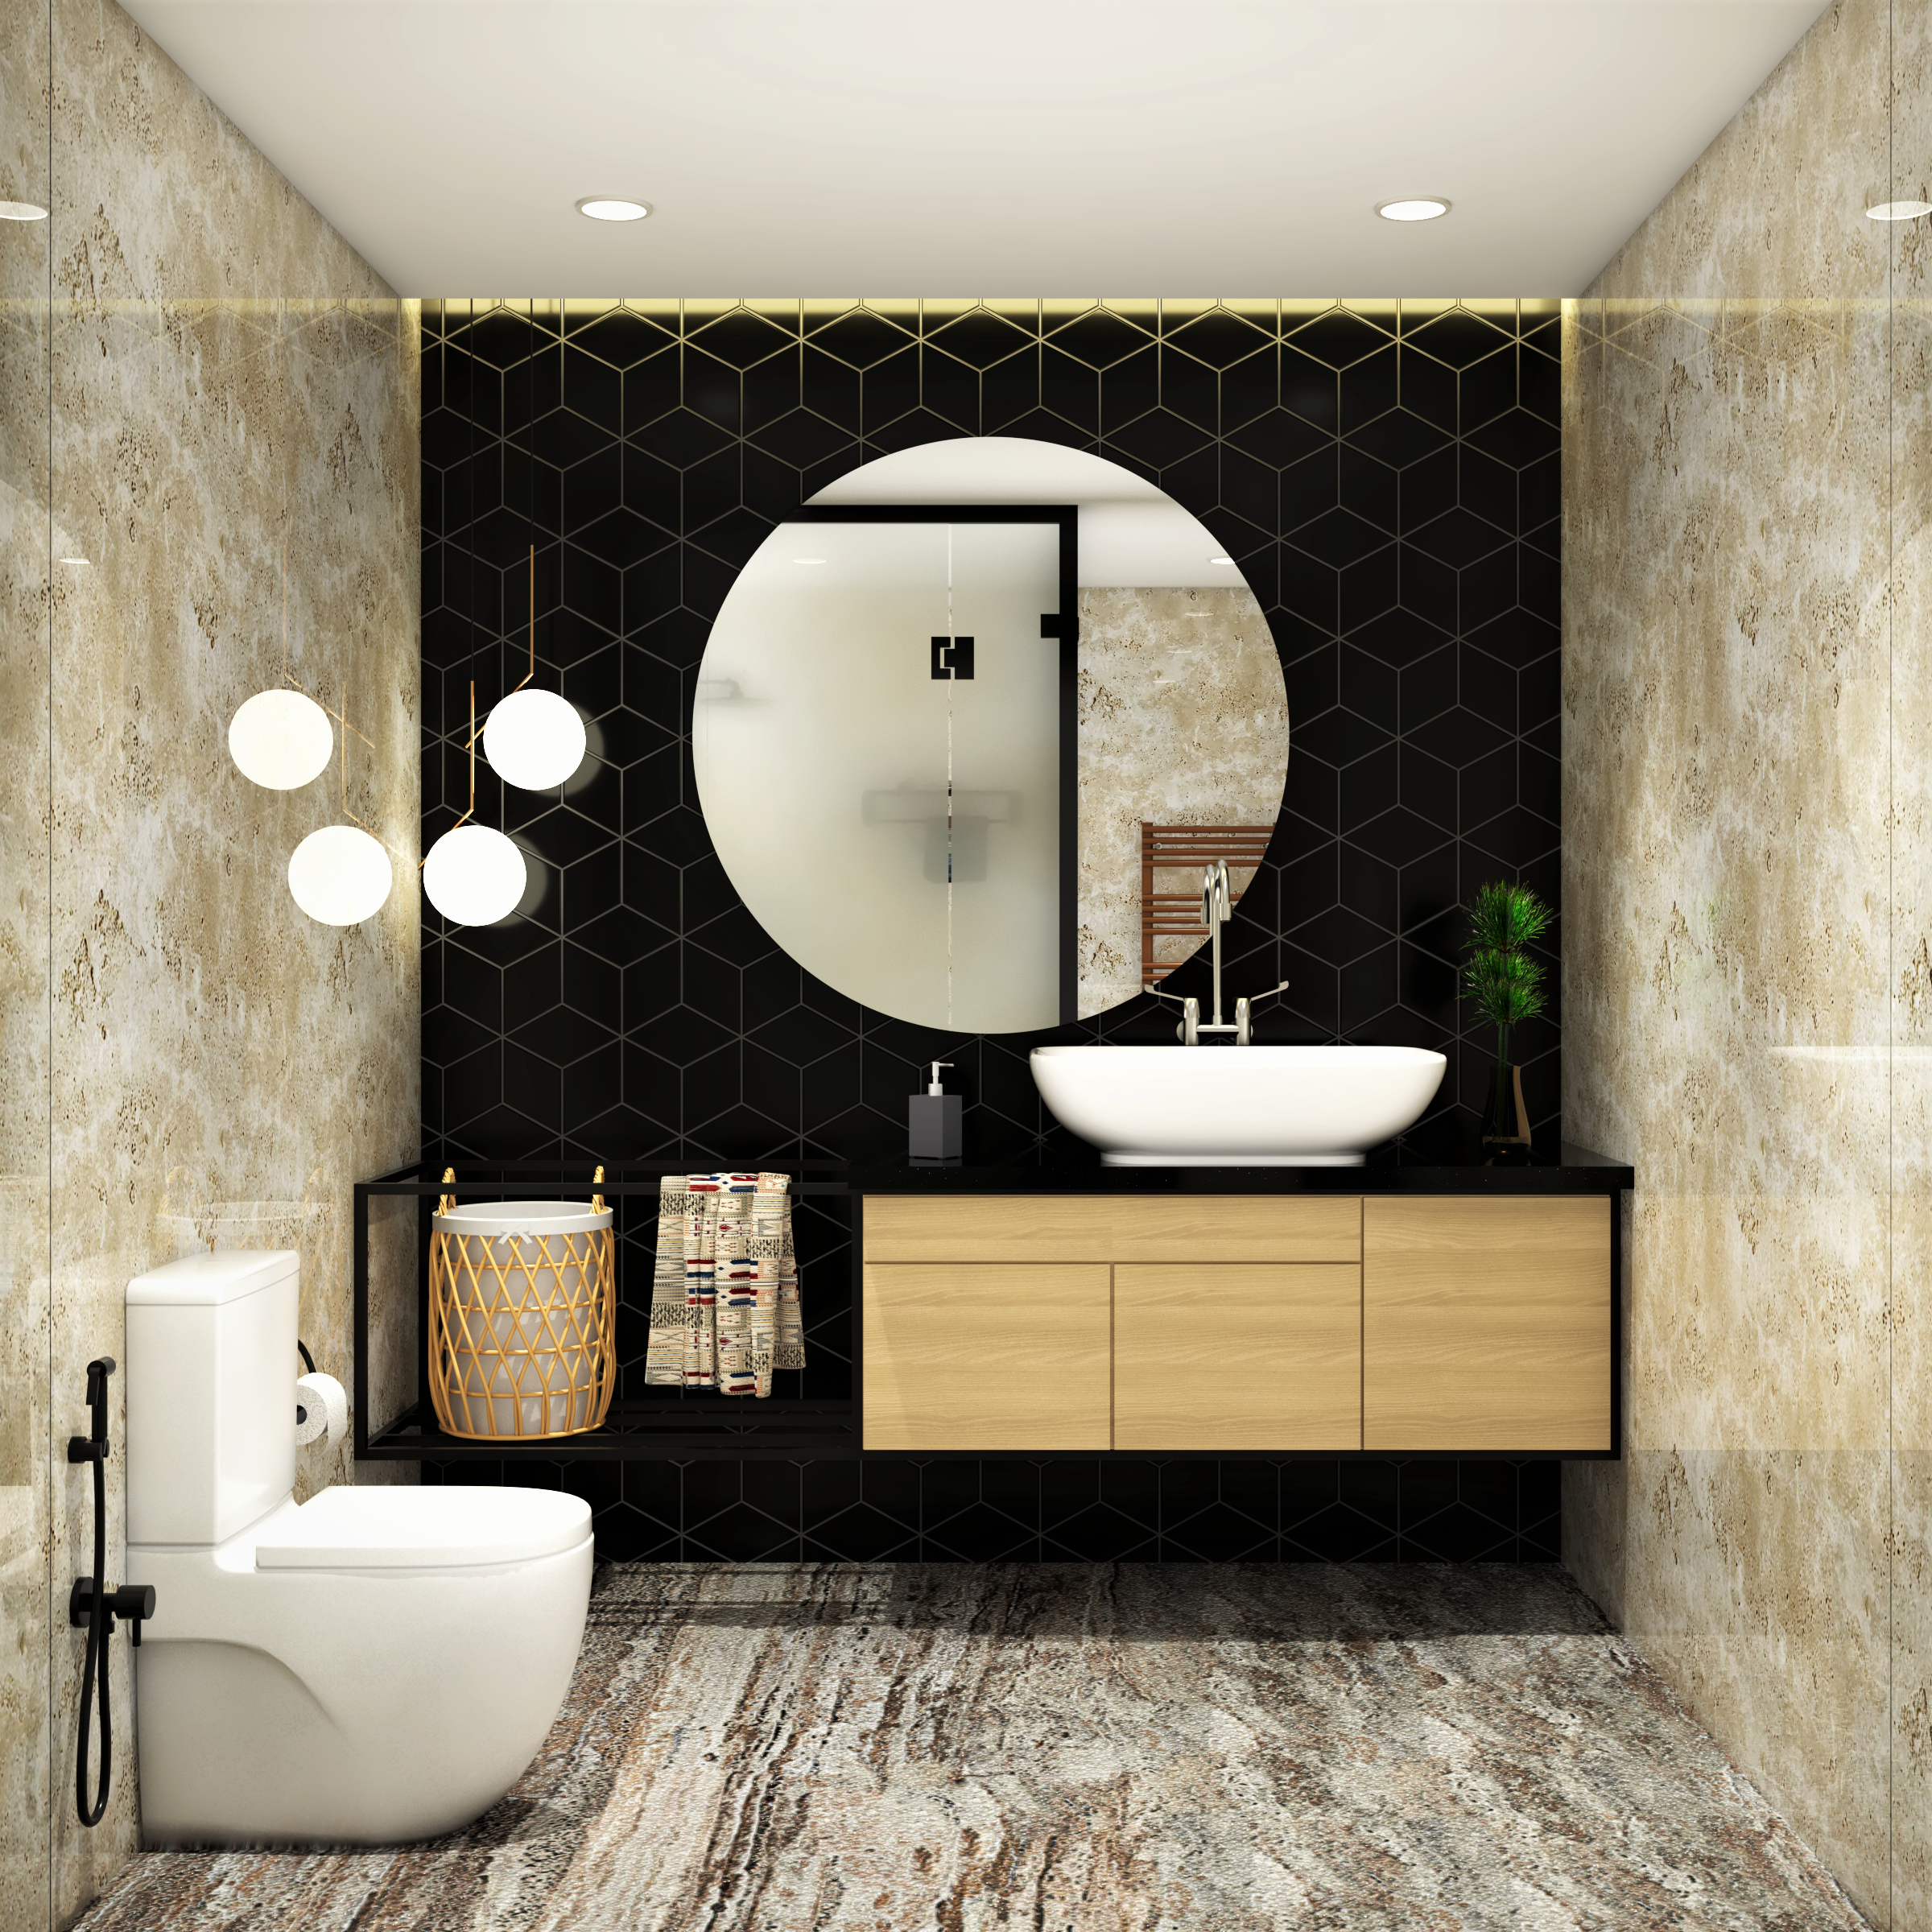 Modern Spacious Bathroom Design With Round Mirror